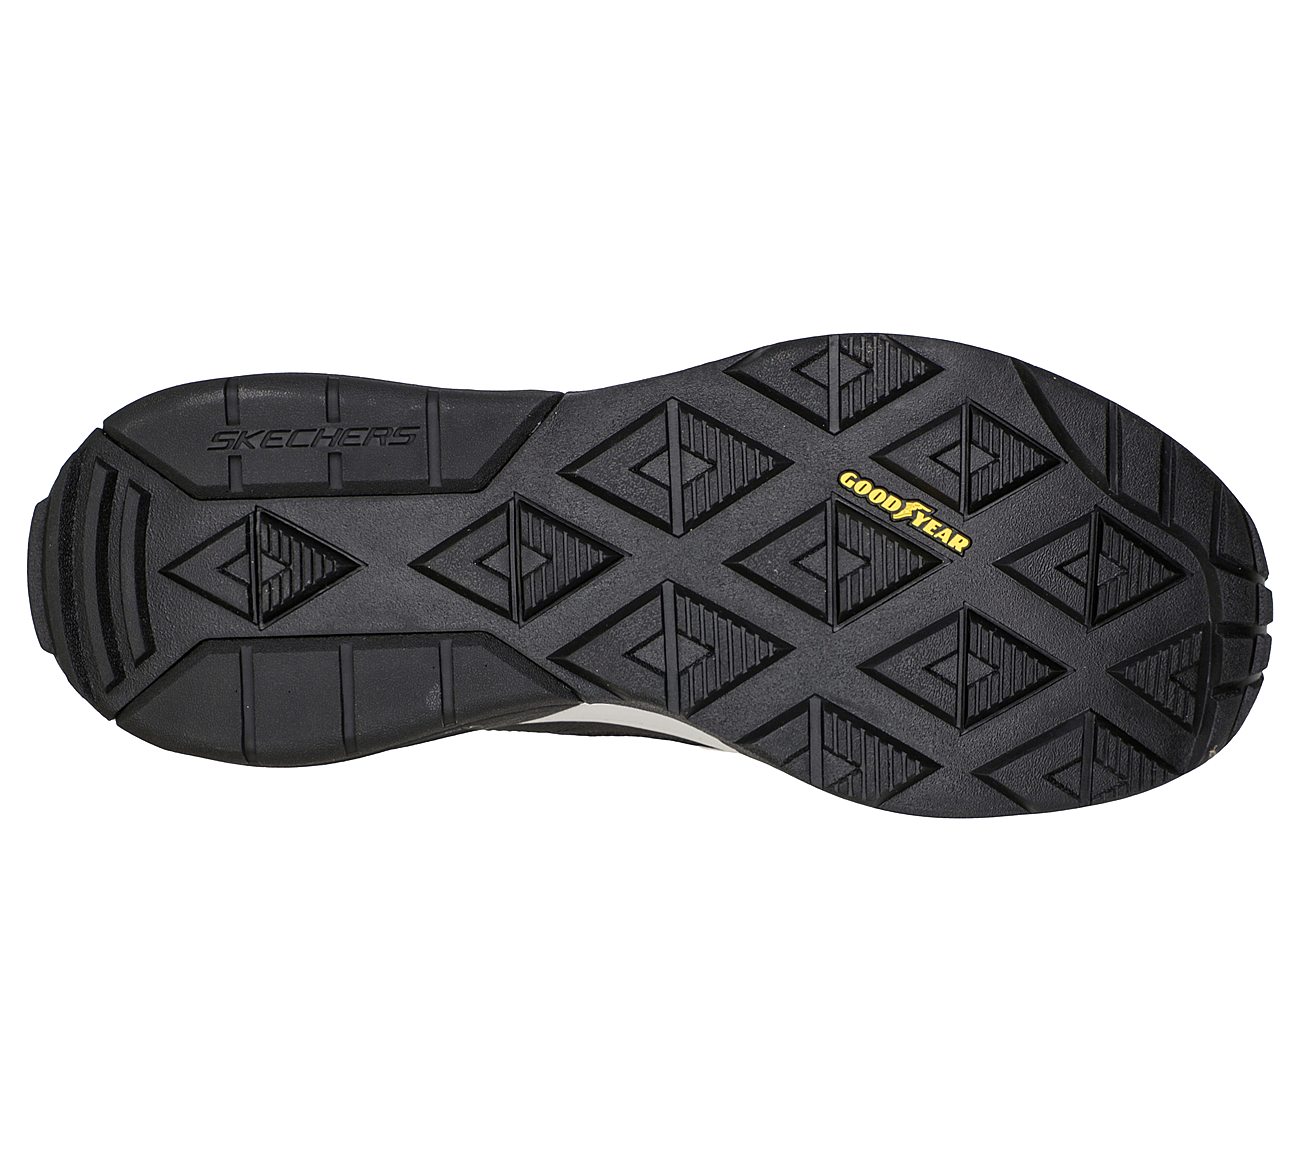 SKECH-AIR EXTREME V2, BLACK/LIME Footwear Bottom View